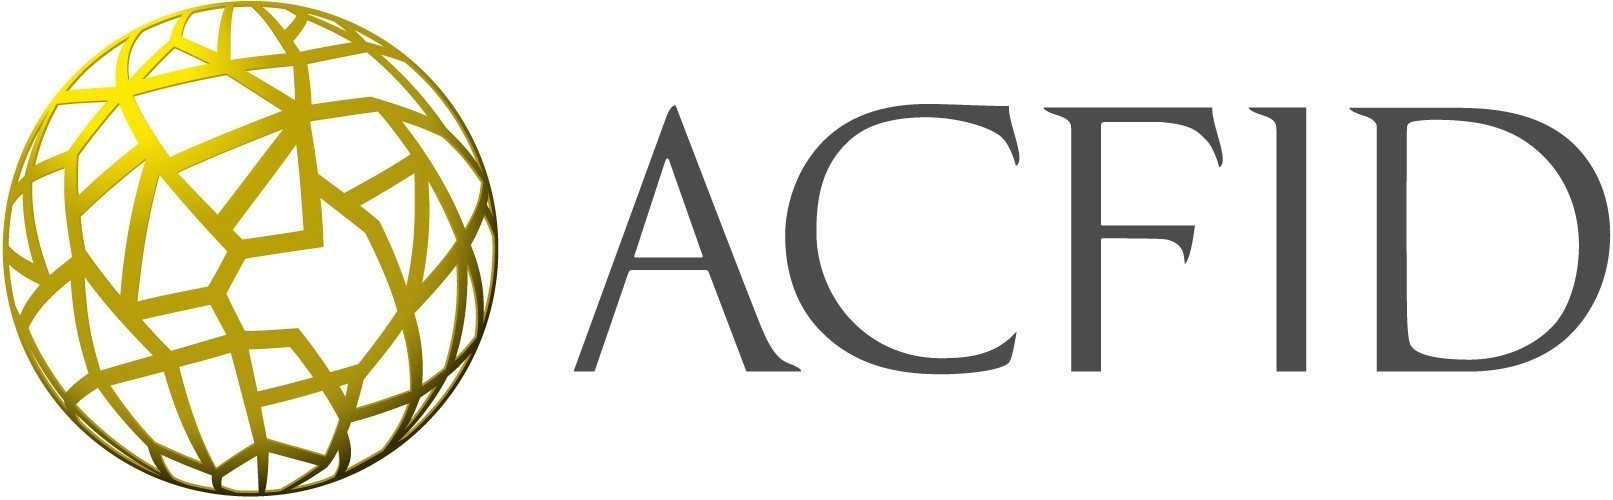 ACFID National Conference 2016 – Impact: A Future International Development Agenda for Australia